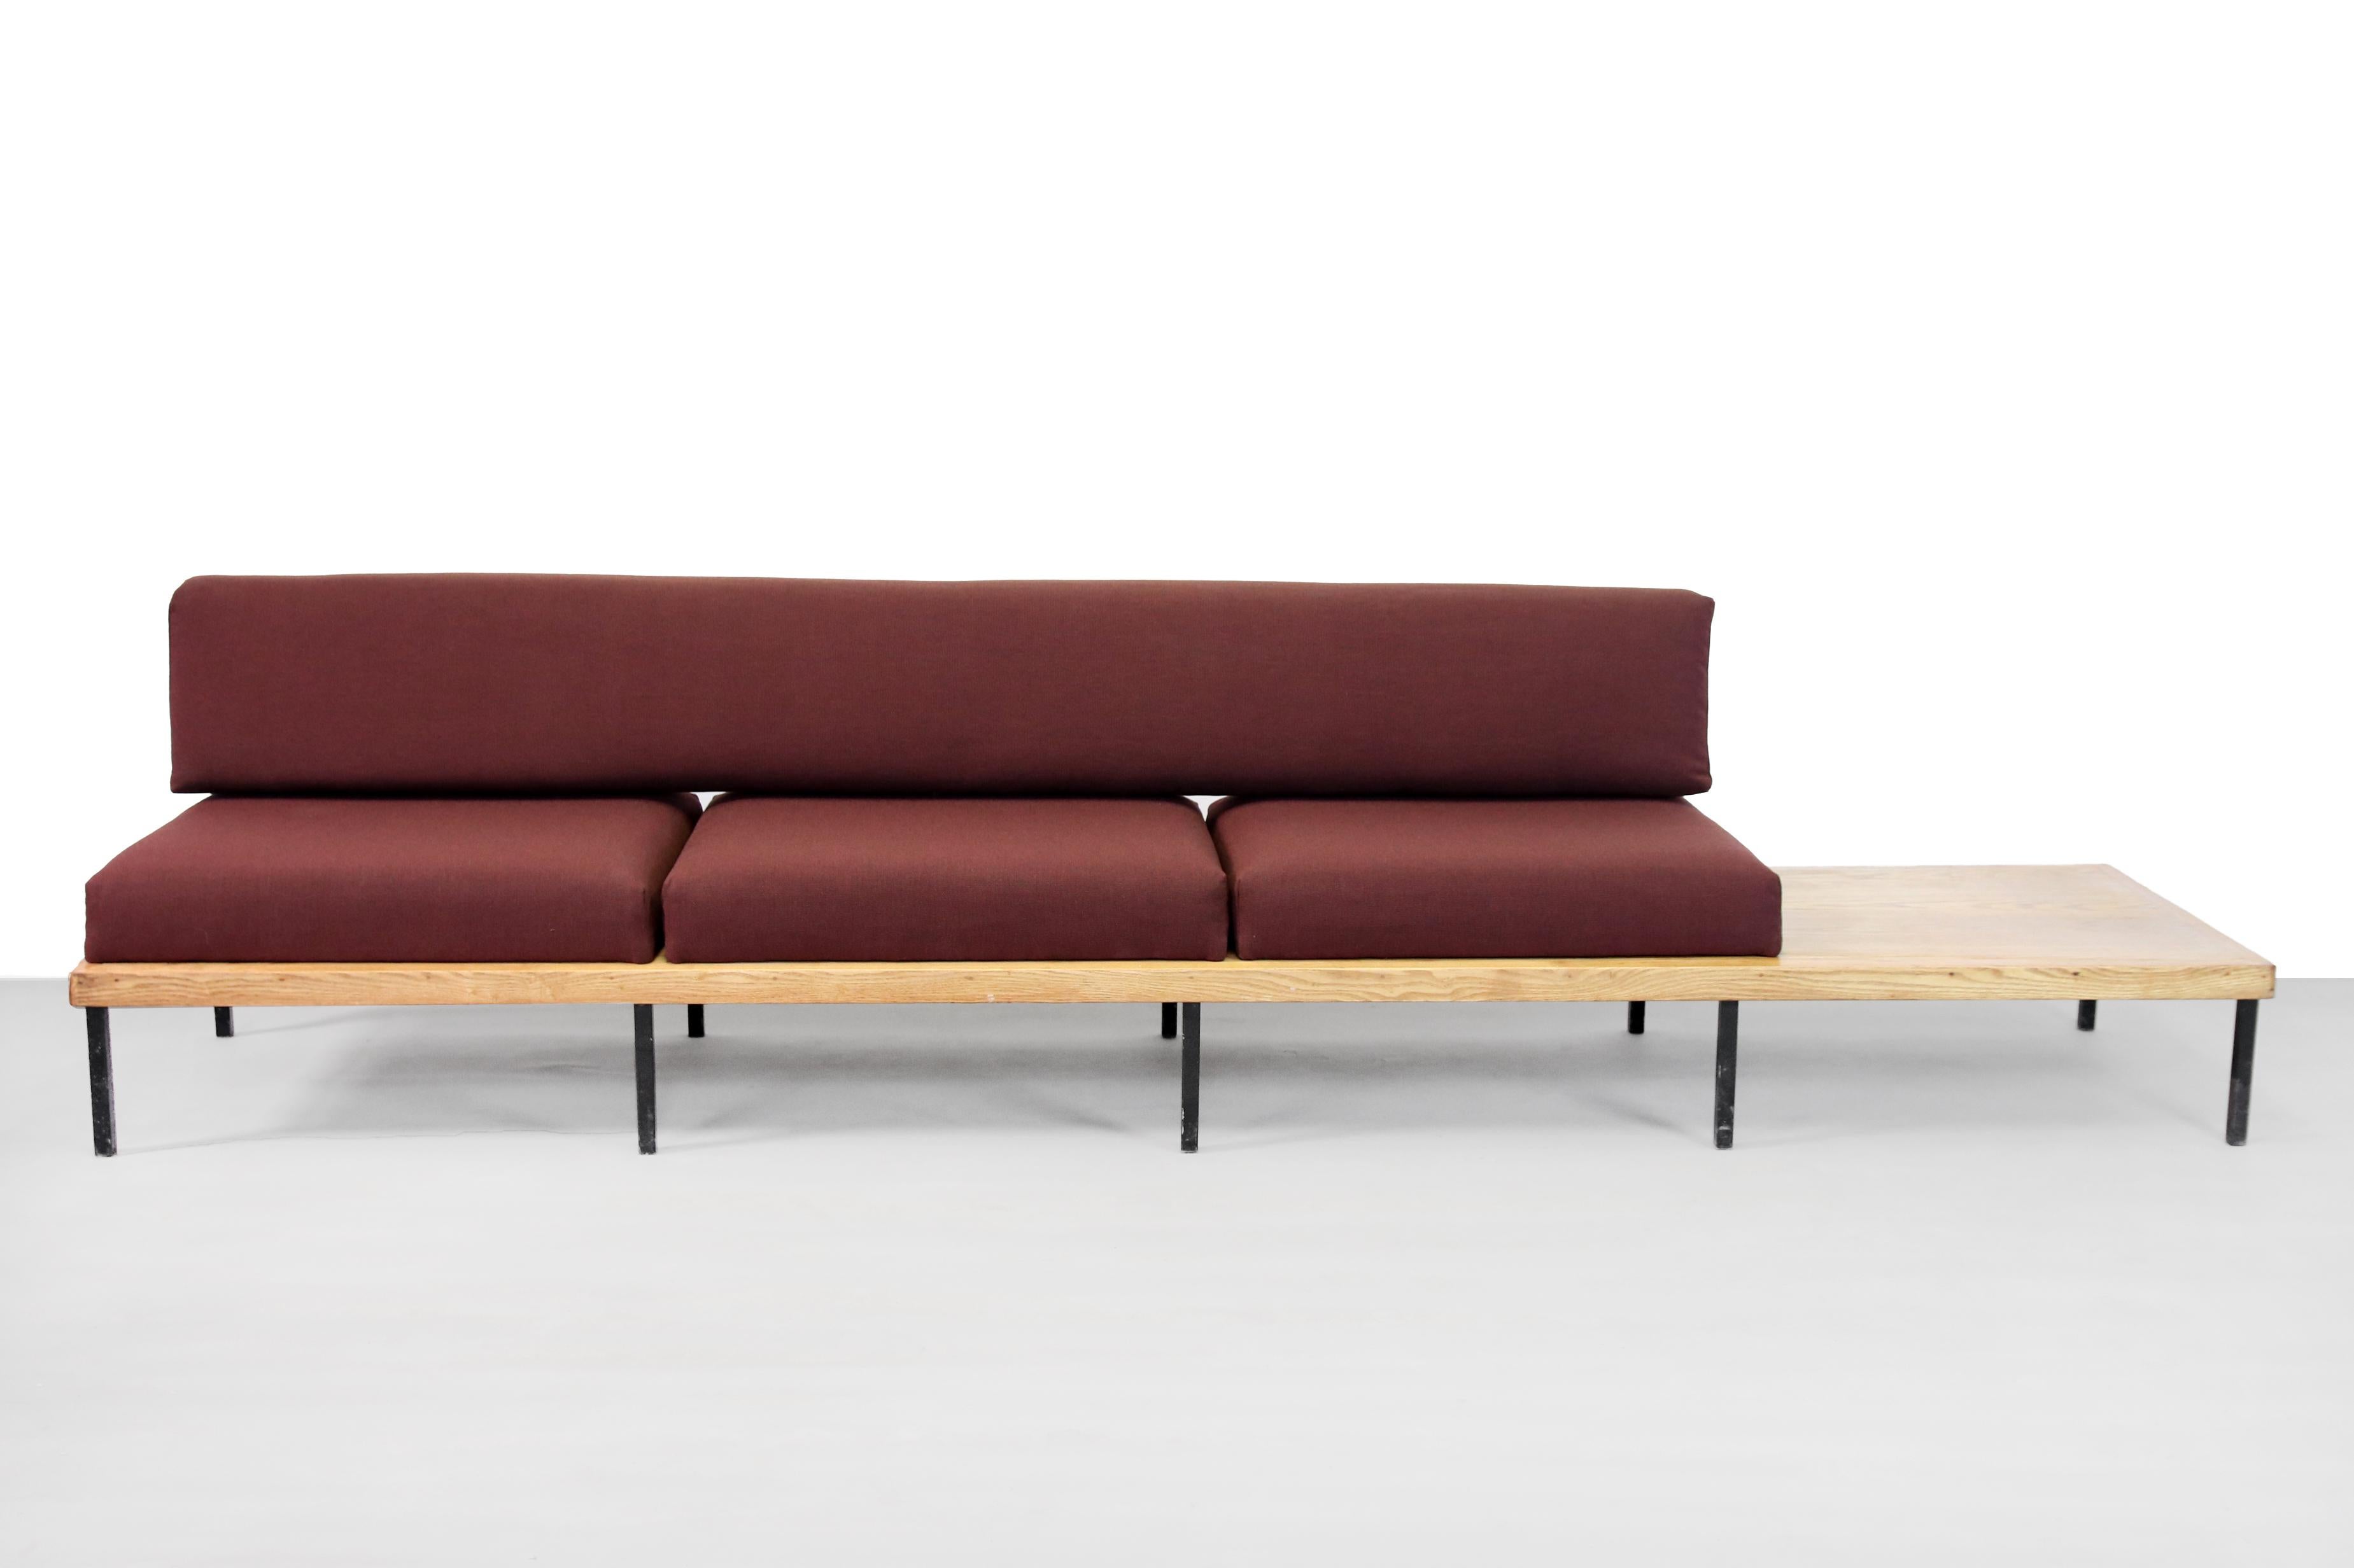 wooden bench sofa design